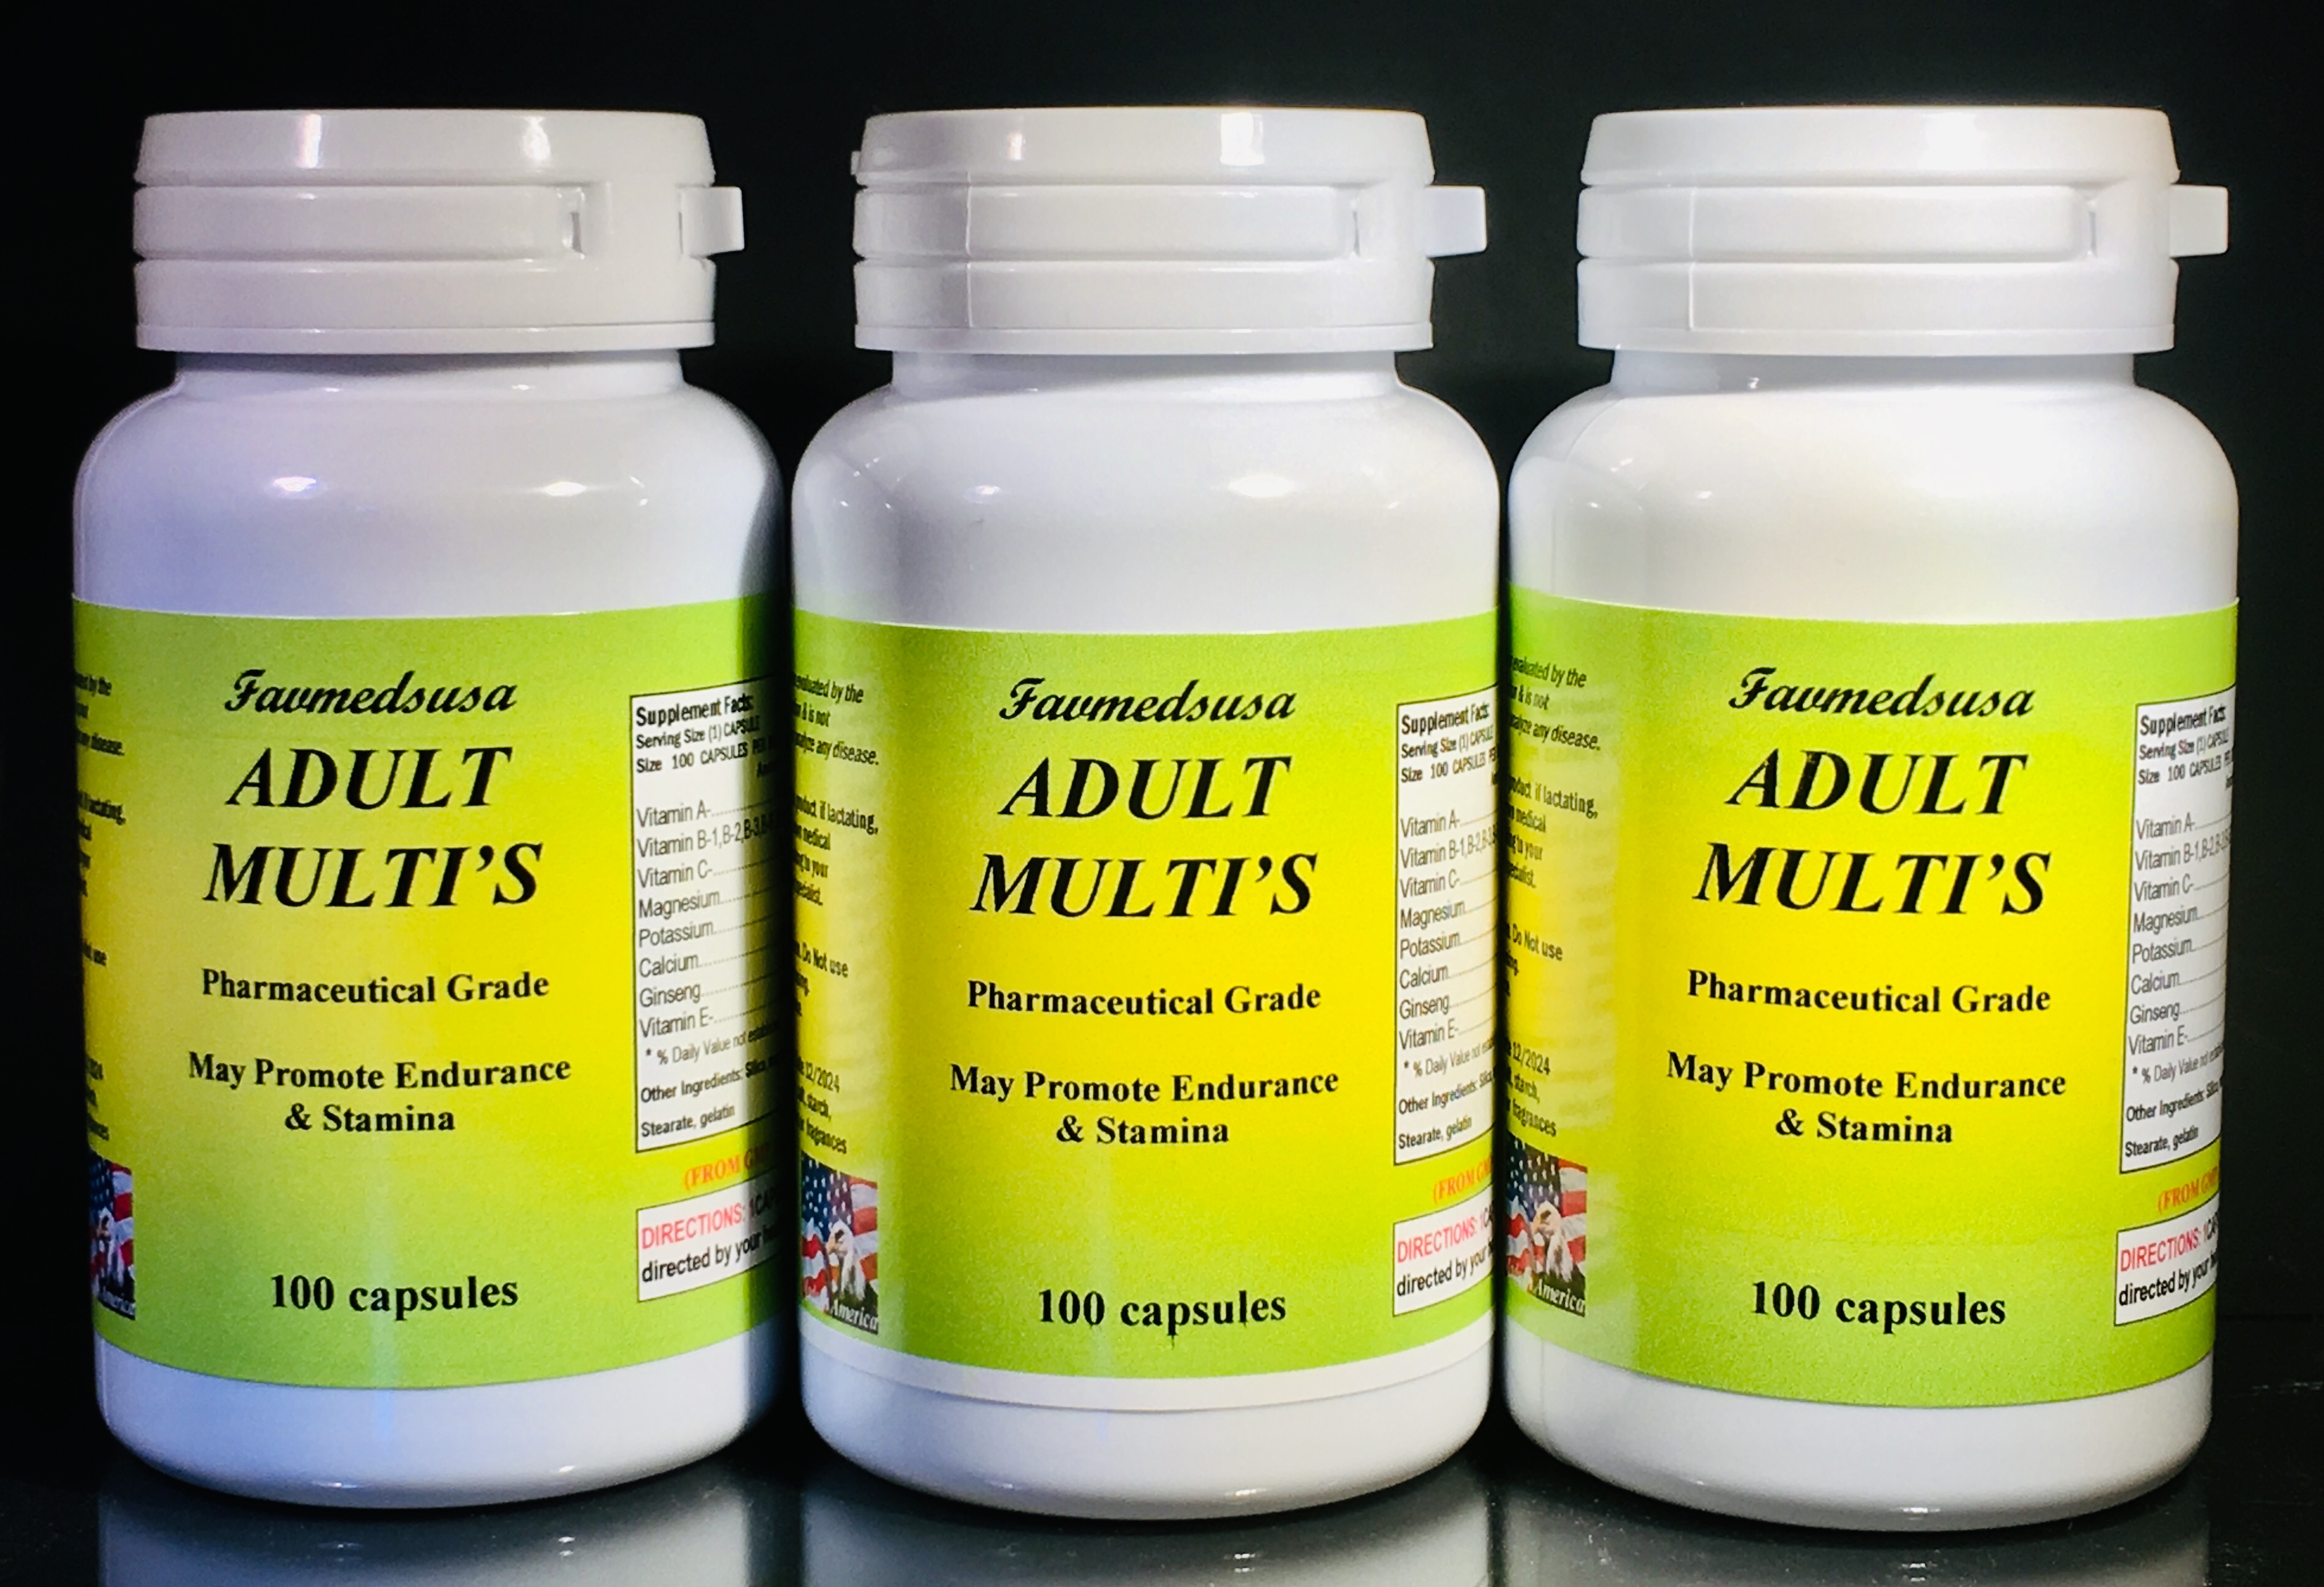 Adult multi-vitamins, b complex vitamins, - 100 capsules - FavMedsUSA.com